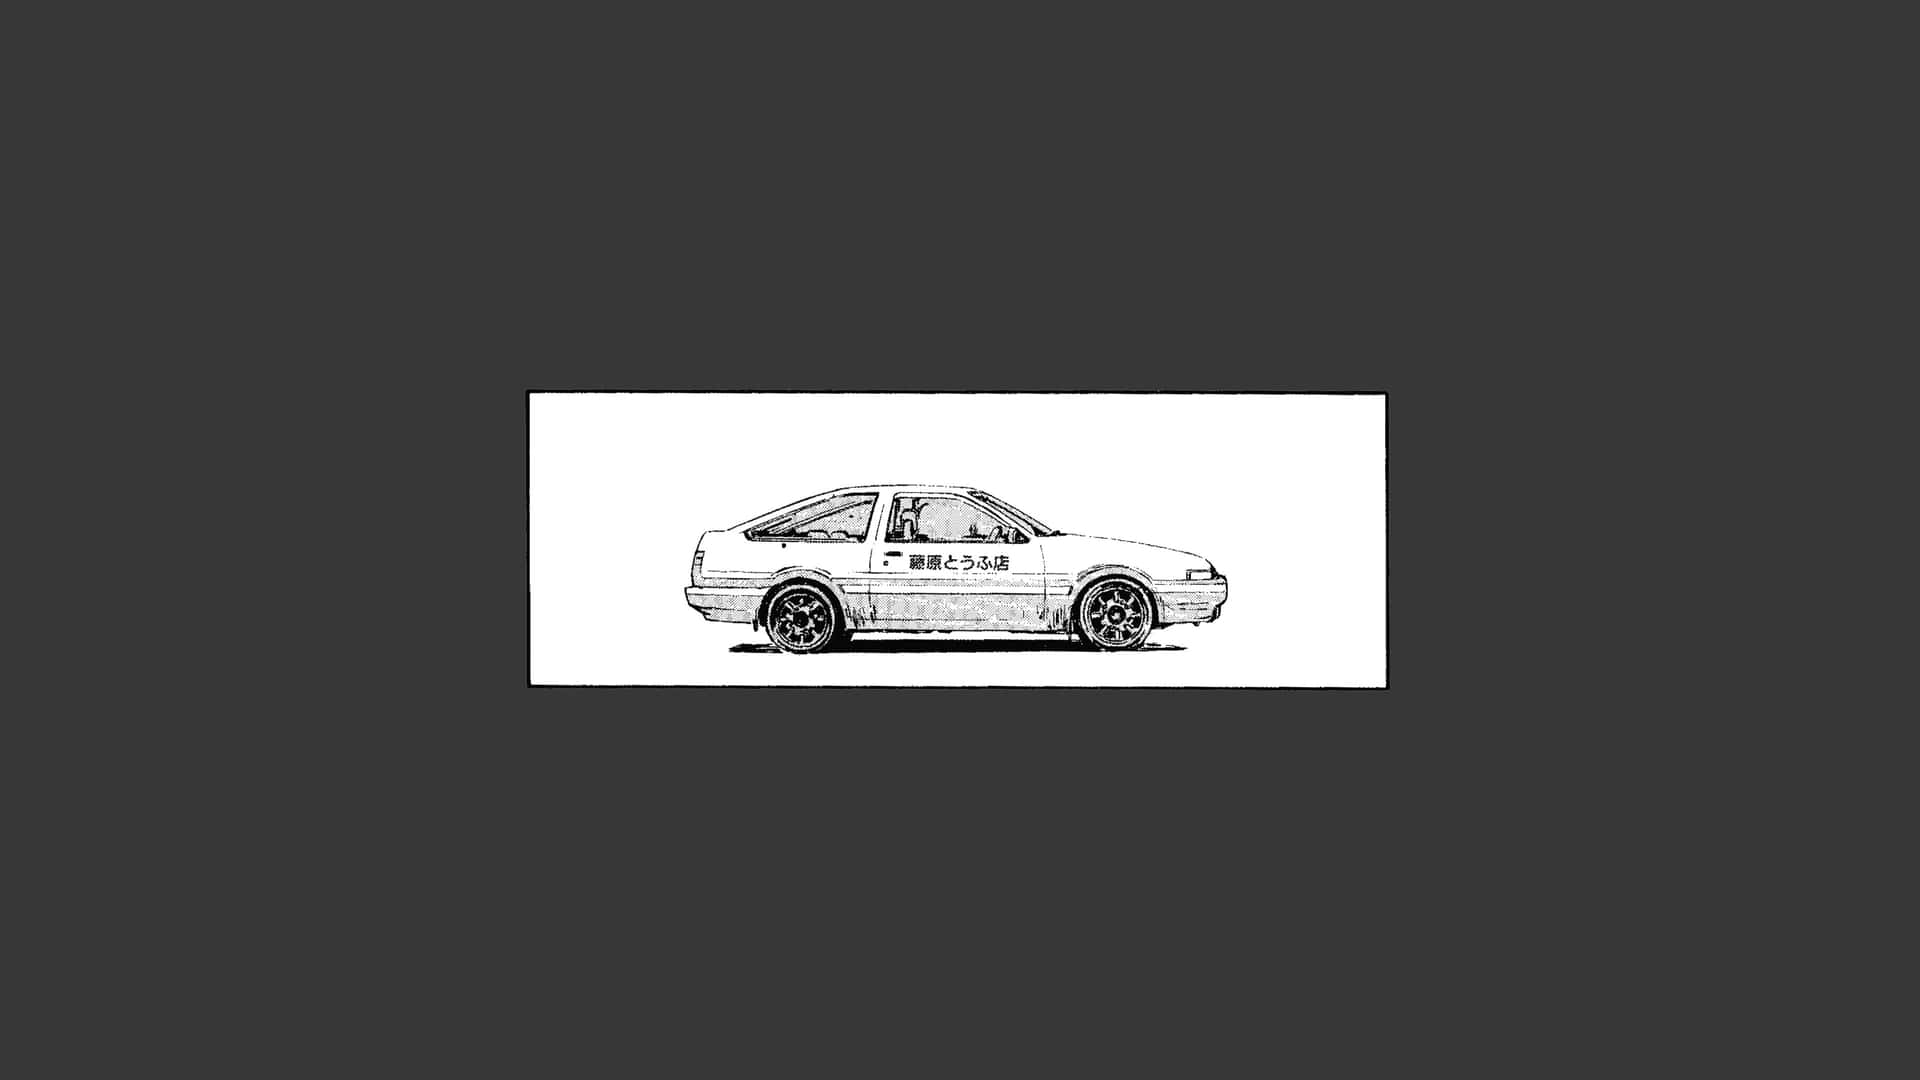 Classic Sports Car: Toyota AE86 Wallpaper